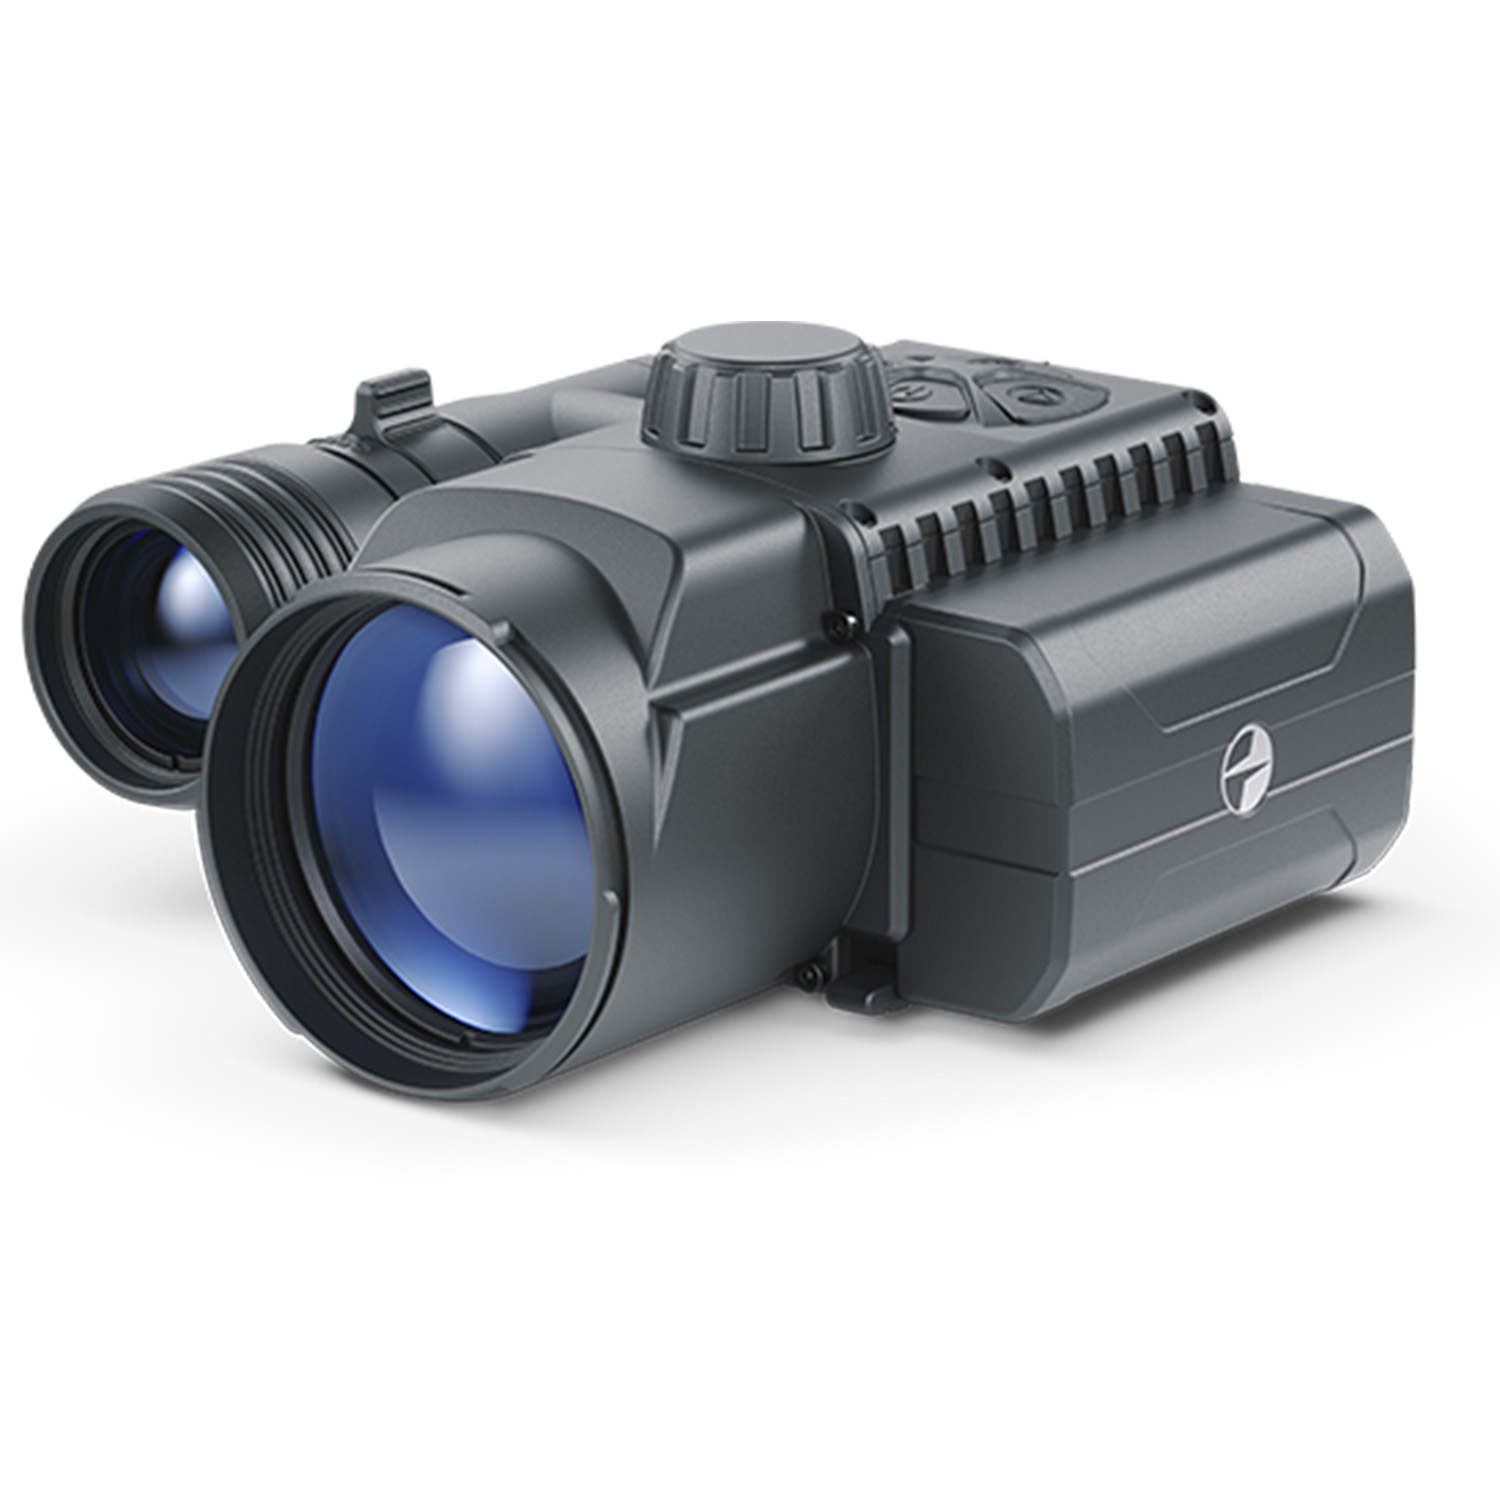 Pulsar F455S digital nightvision device